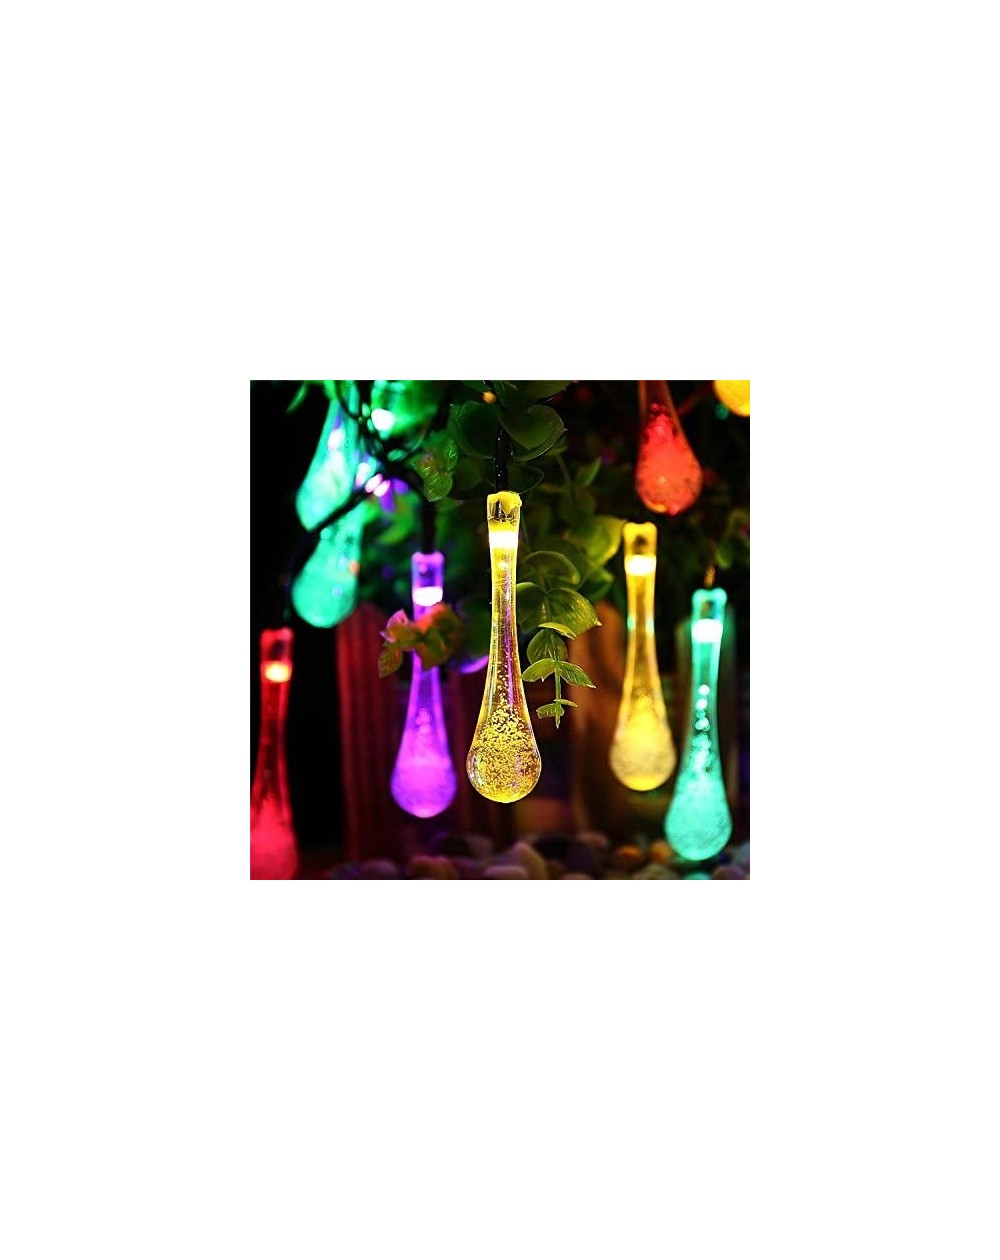 Outdoor String Lights Solar Strings Lights- 20 Feet 30 LED Water Drop Solar Fairy Lights- Waterproof Lights for Indoor/Outdoo...